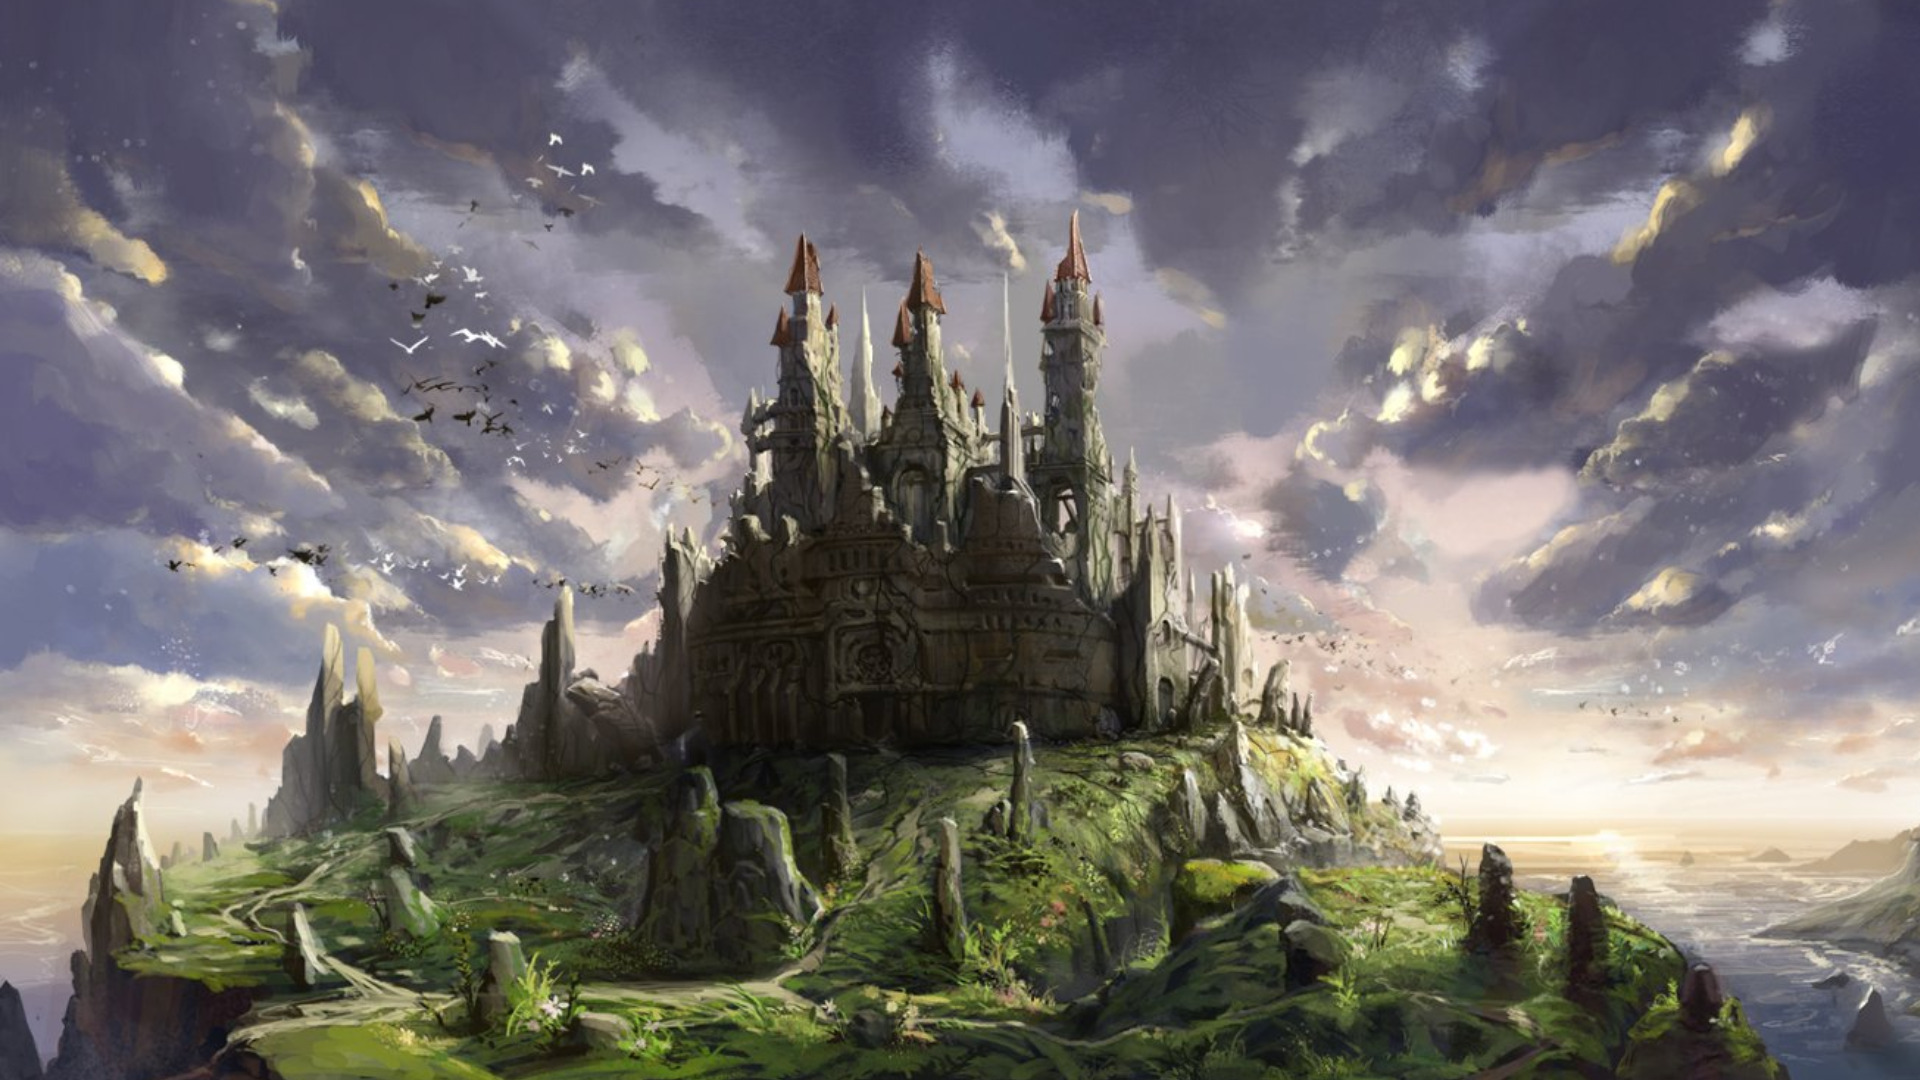 Fantasy Dark Castle Wallpaper Image Amp Pictures Becuo